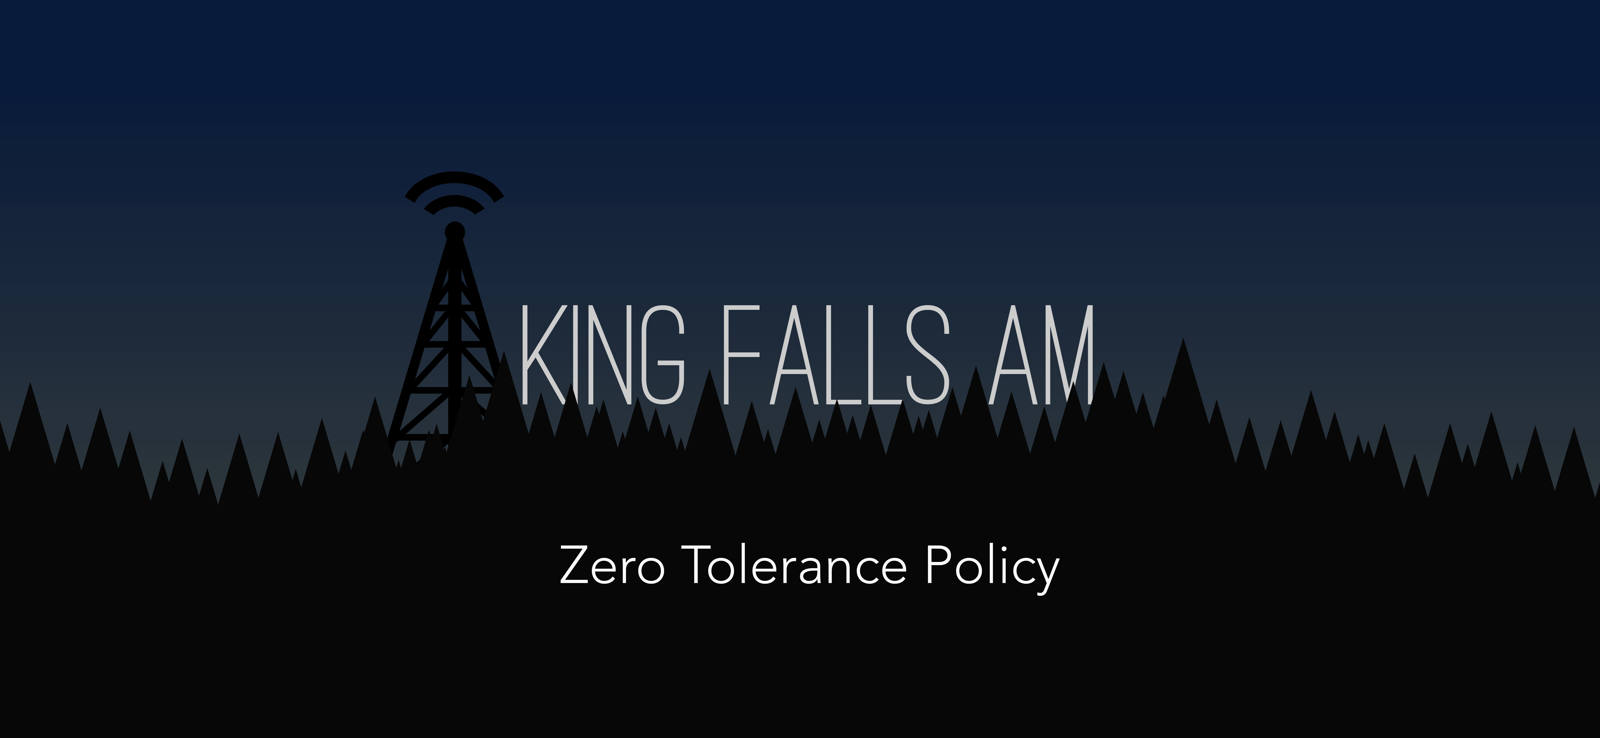 "King Falls AM" Podcast